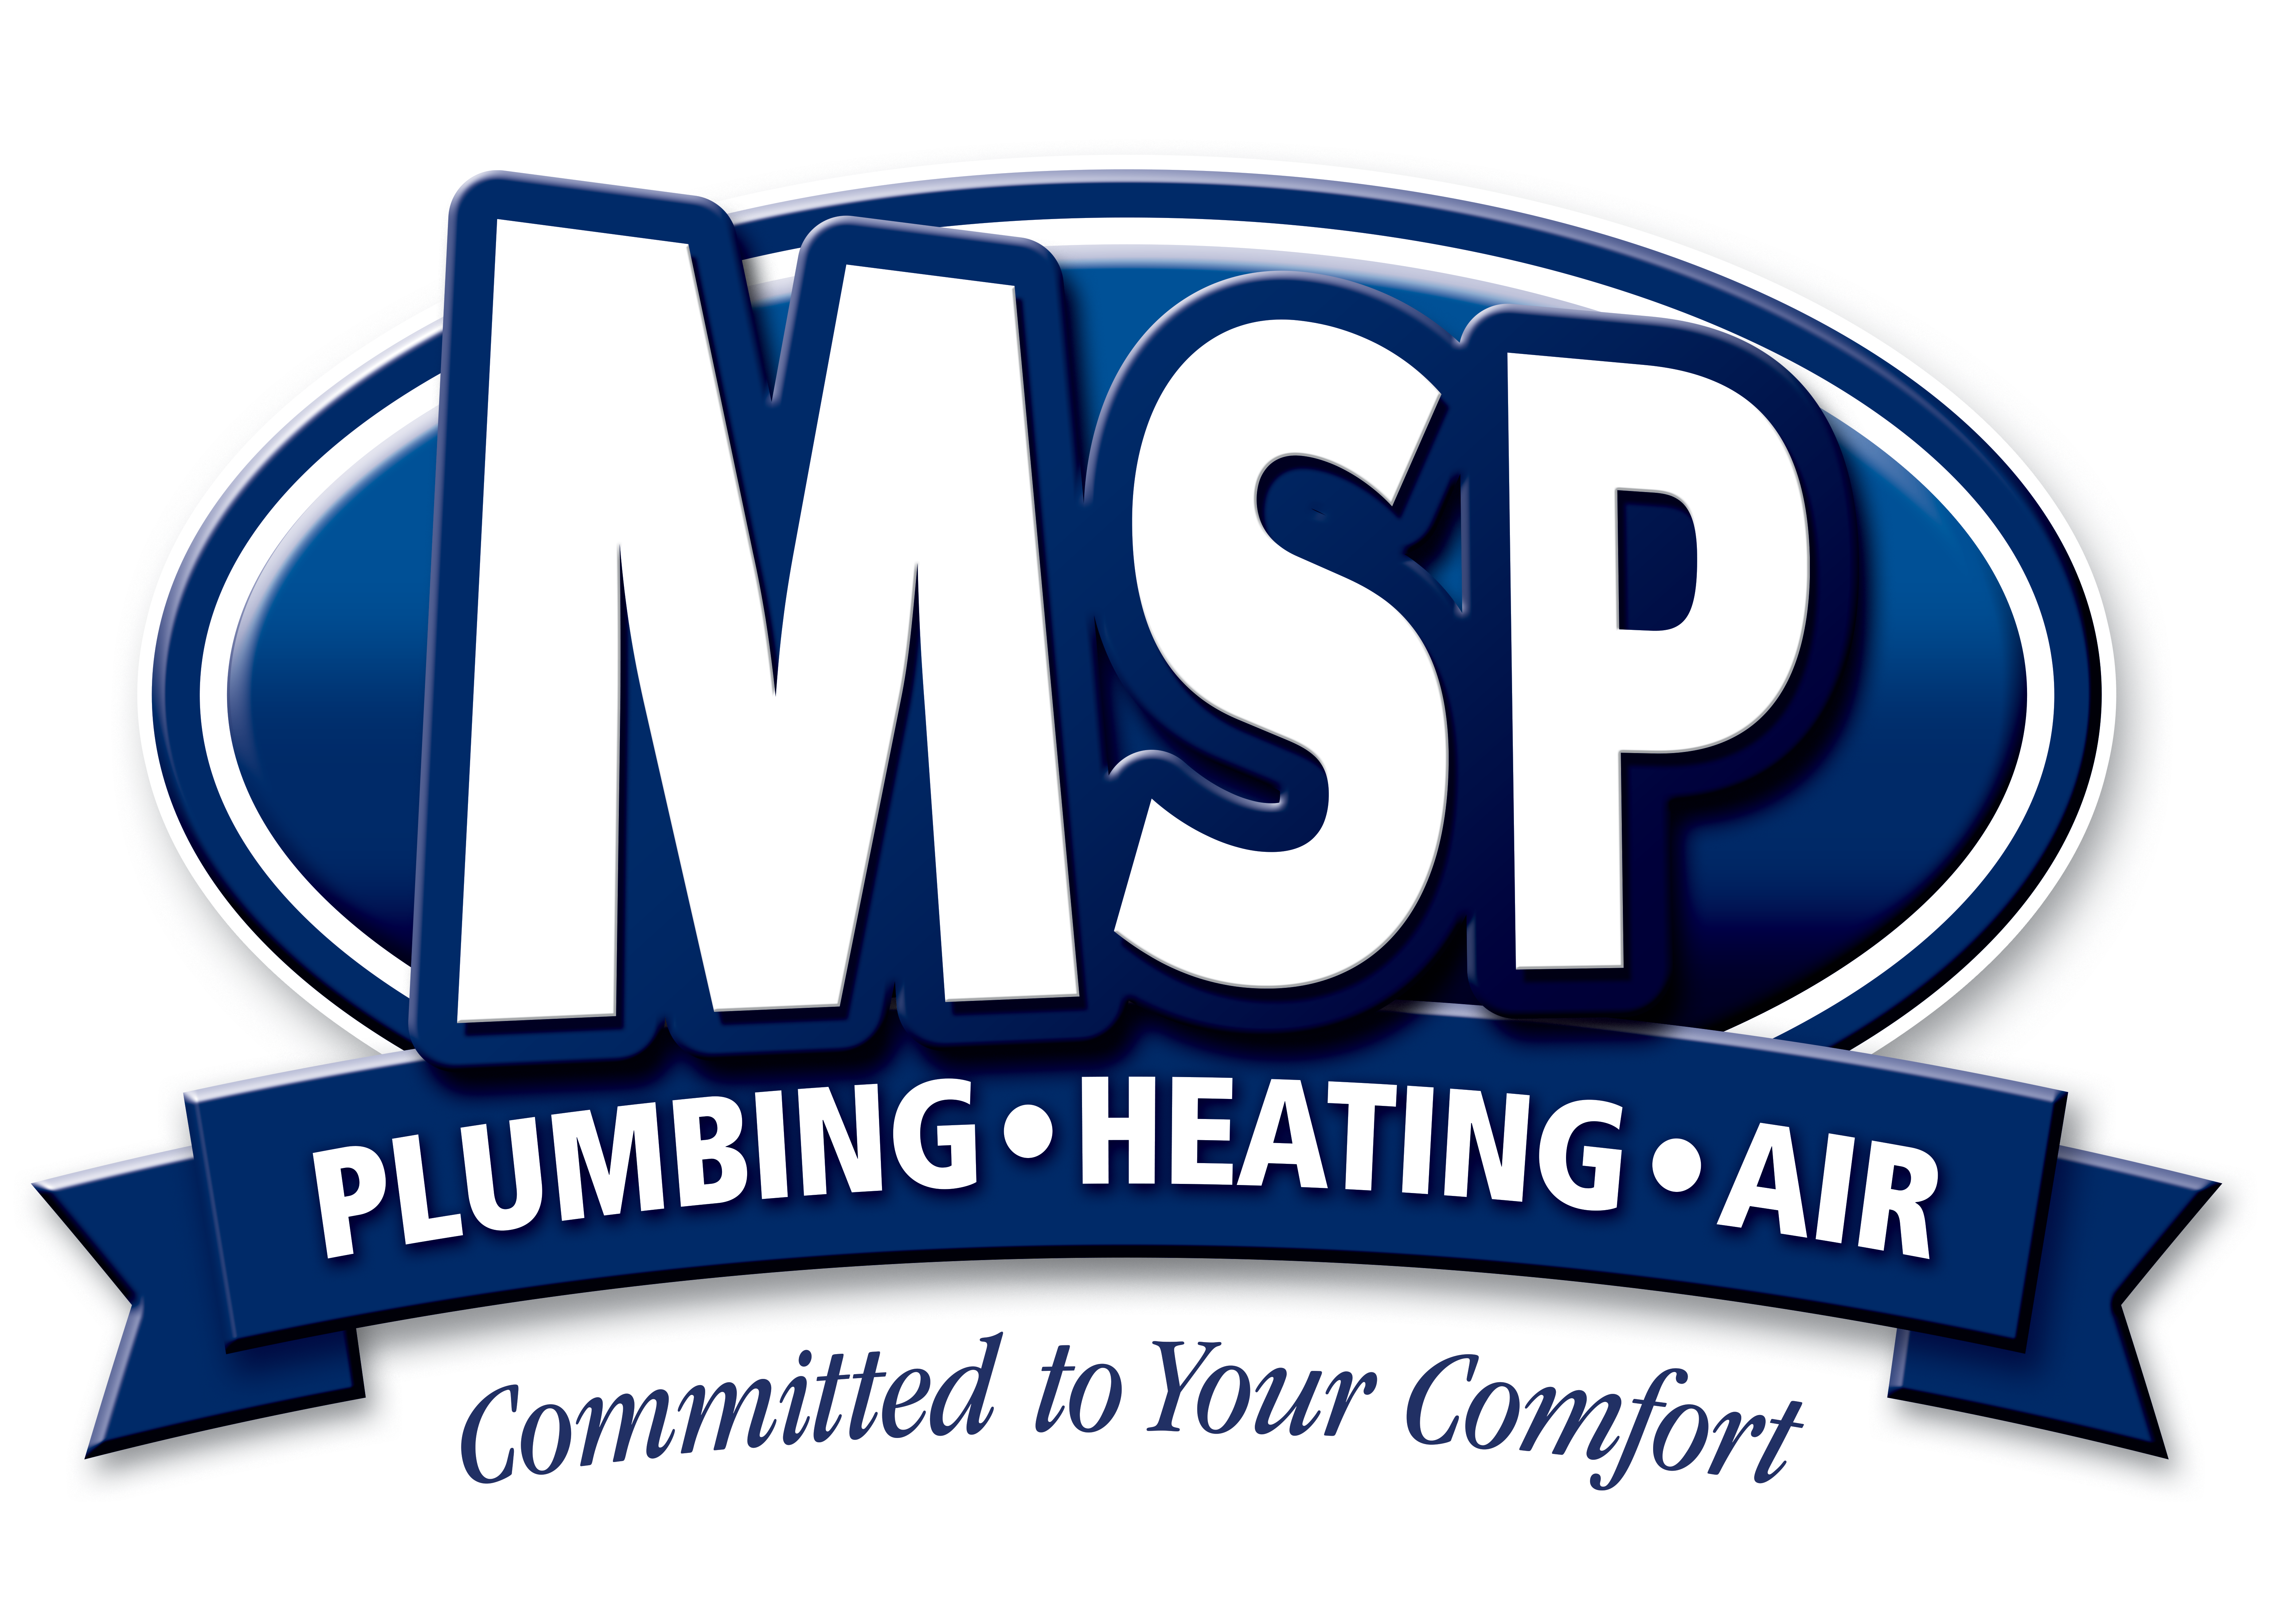 Minneapolis Saint Paul Plumbing, Heating Air Logo